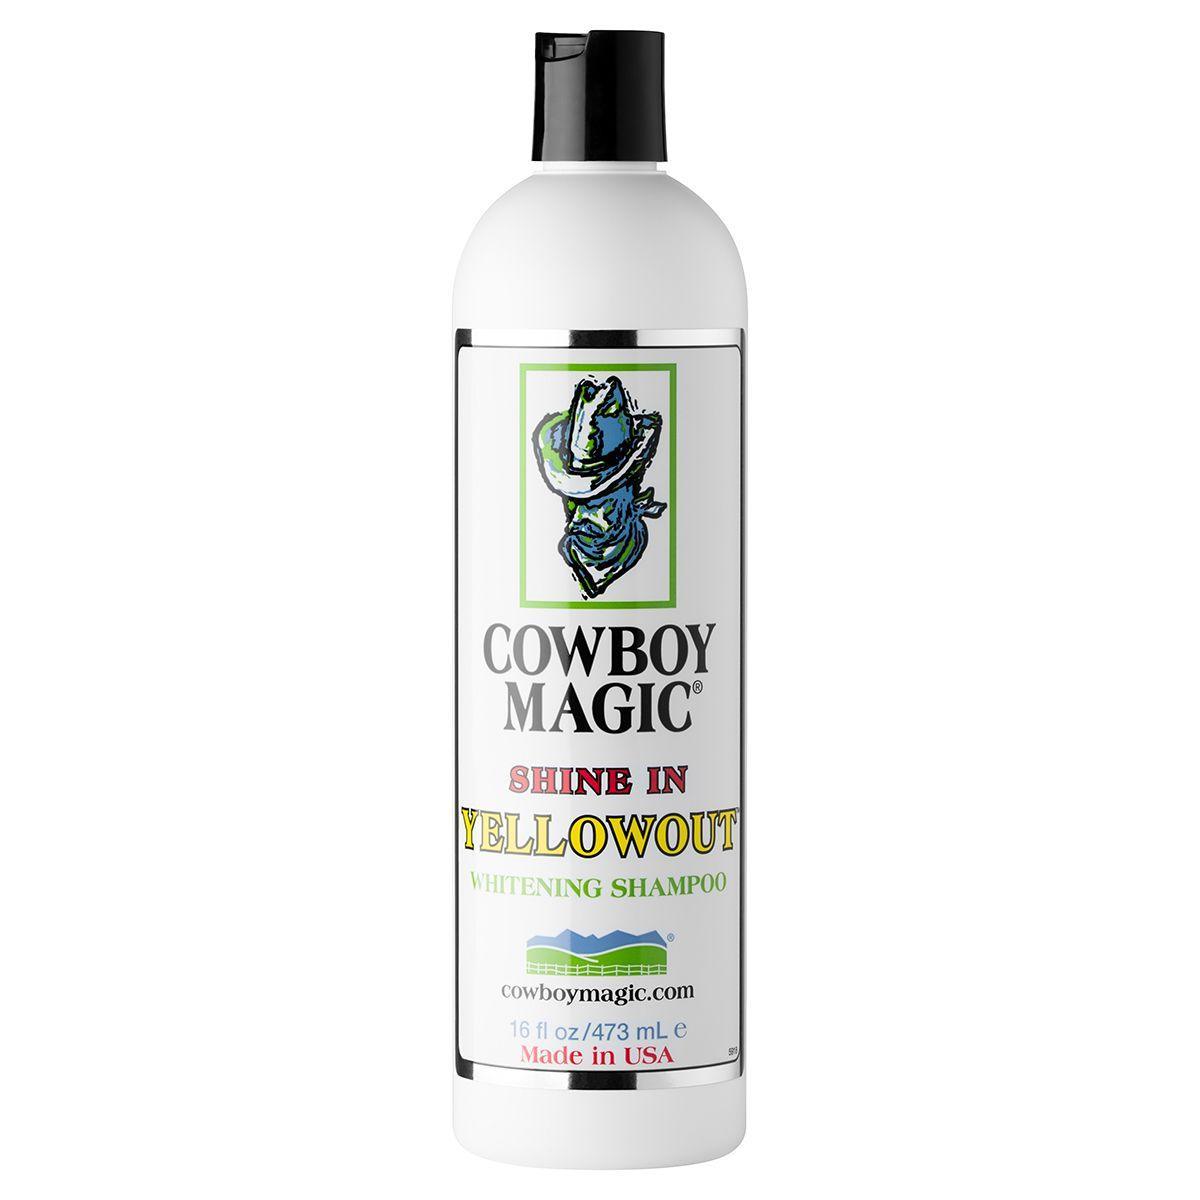 Cowboy Magic Shine In Yellowout Whitening Shampoo - Houlihan Saddlery LLC